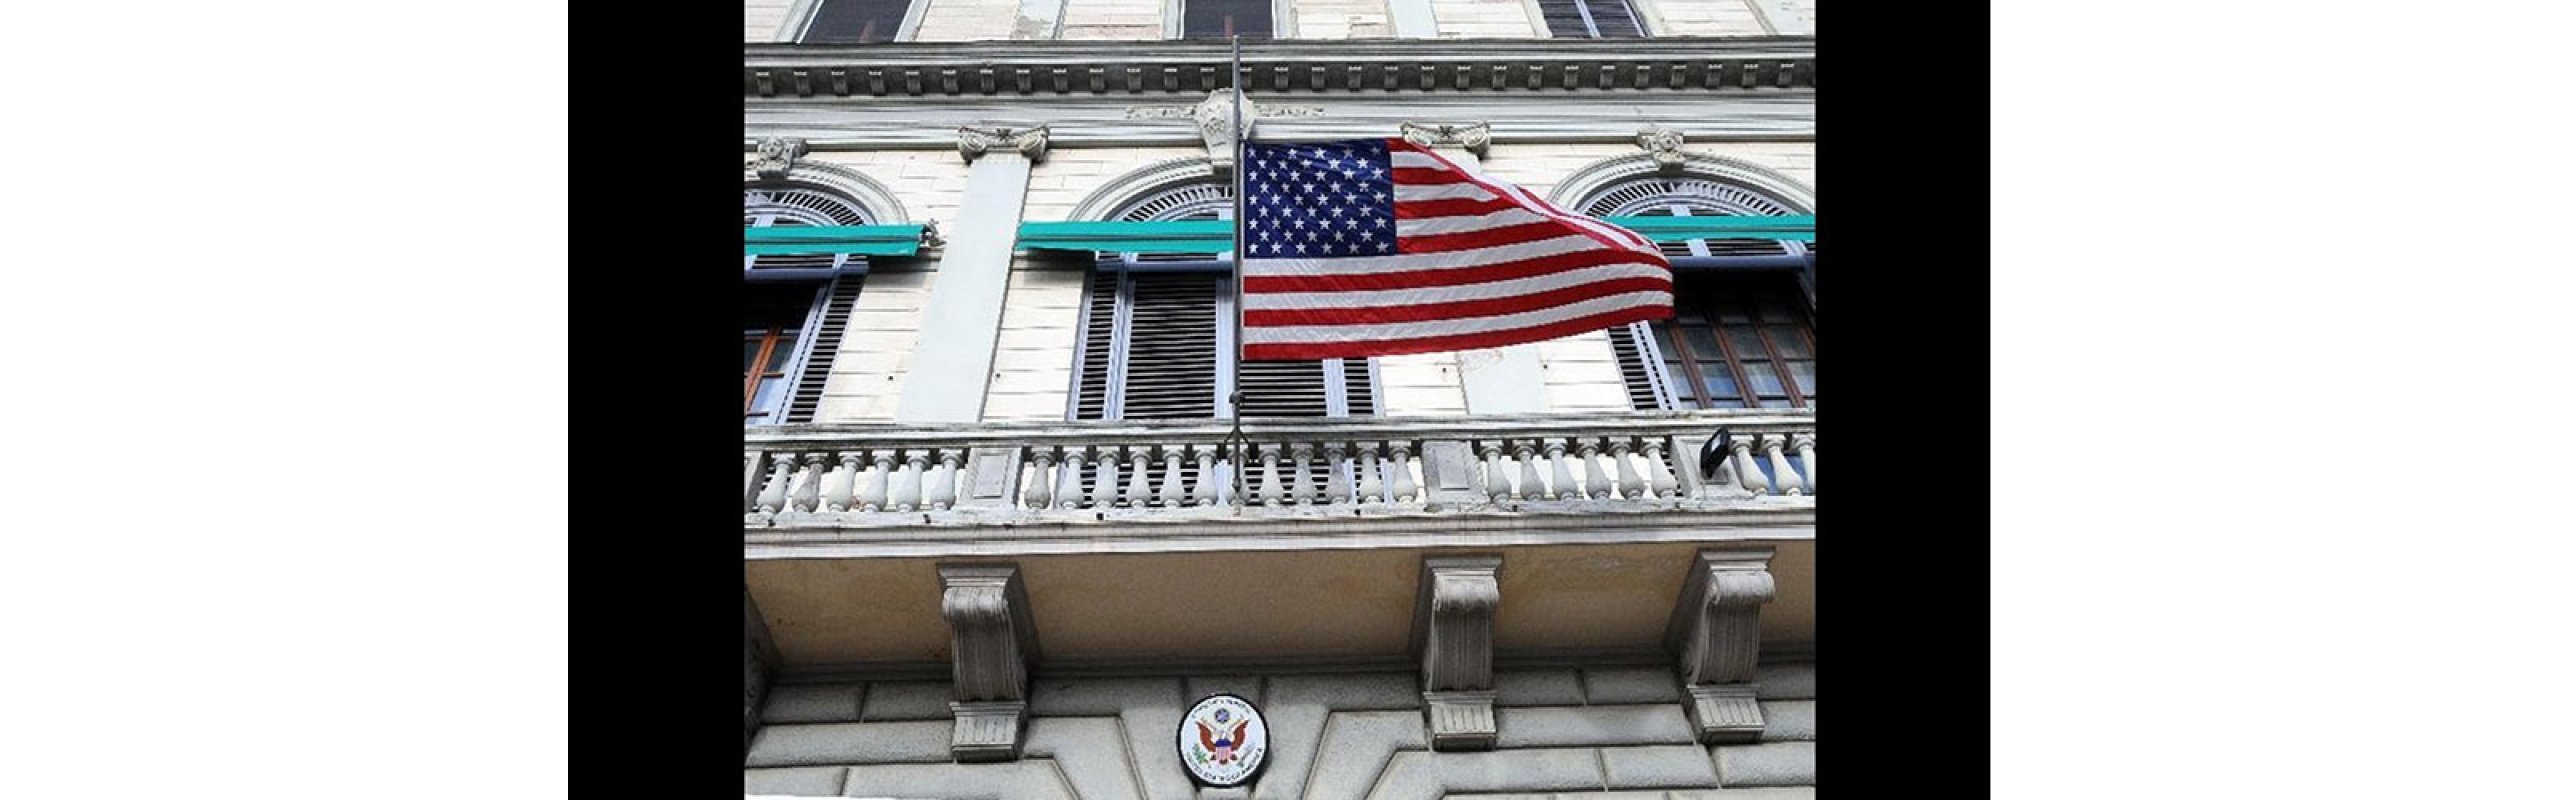 Insieme200: celebrating 200 years of U.S. diplomatic presence in Florence